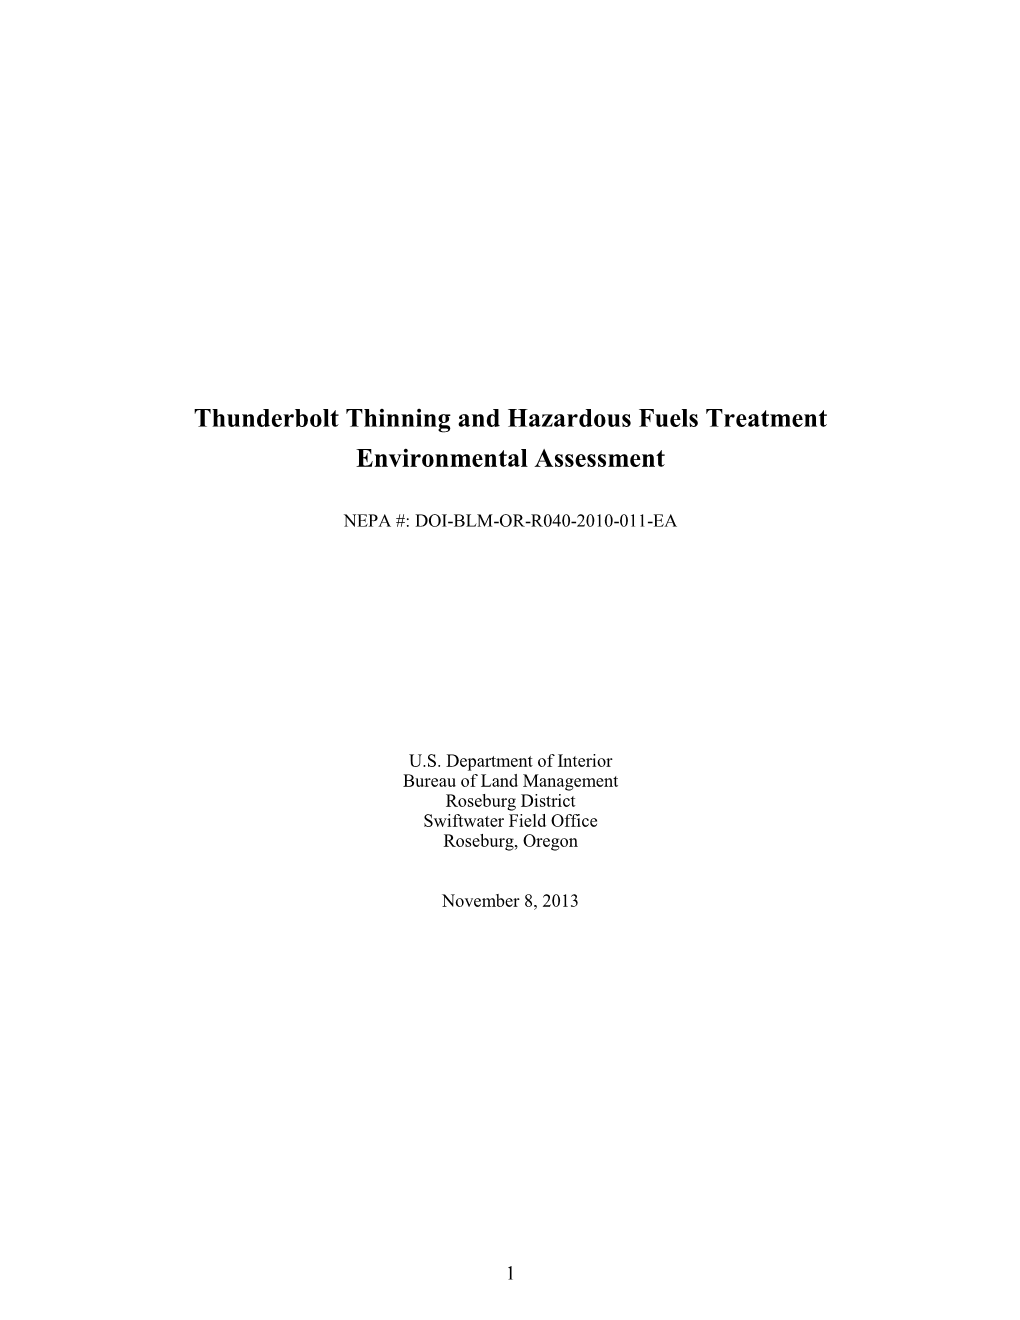 Thunderbolt EA Thinning and Hazardous Fuels Treatment